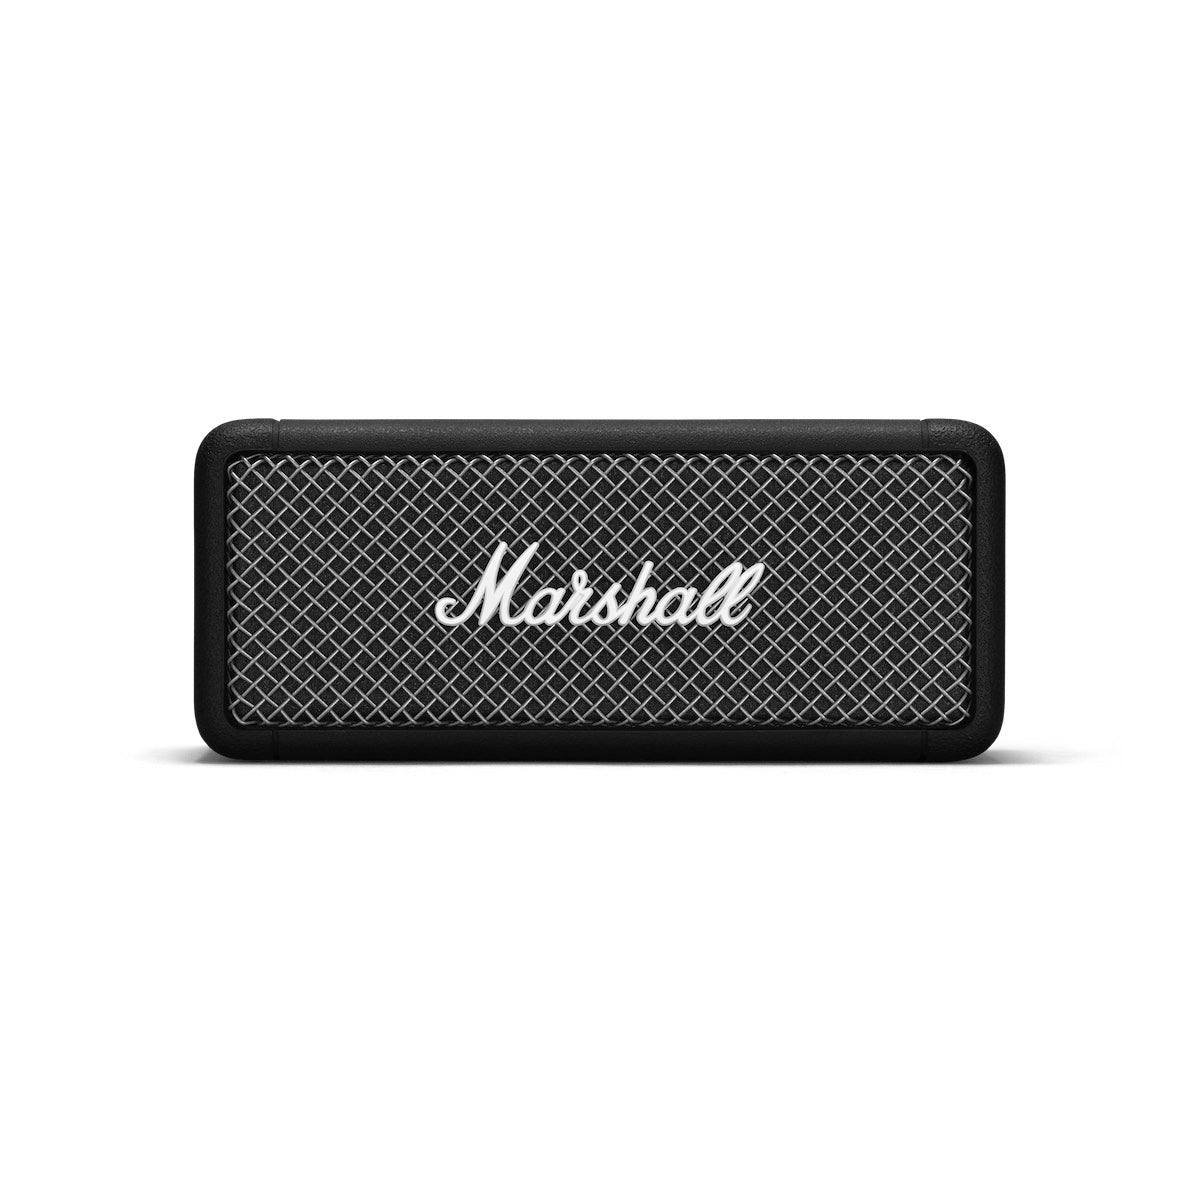 Marshall Emberton - Portable Bluetooth Speaker - AVStore